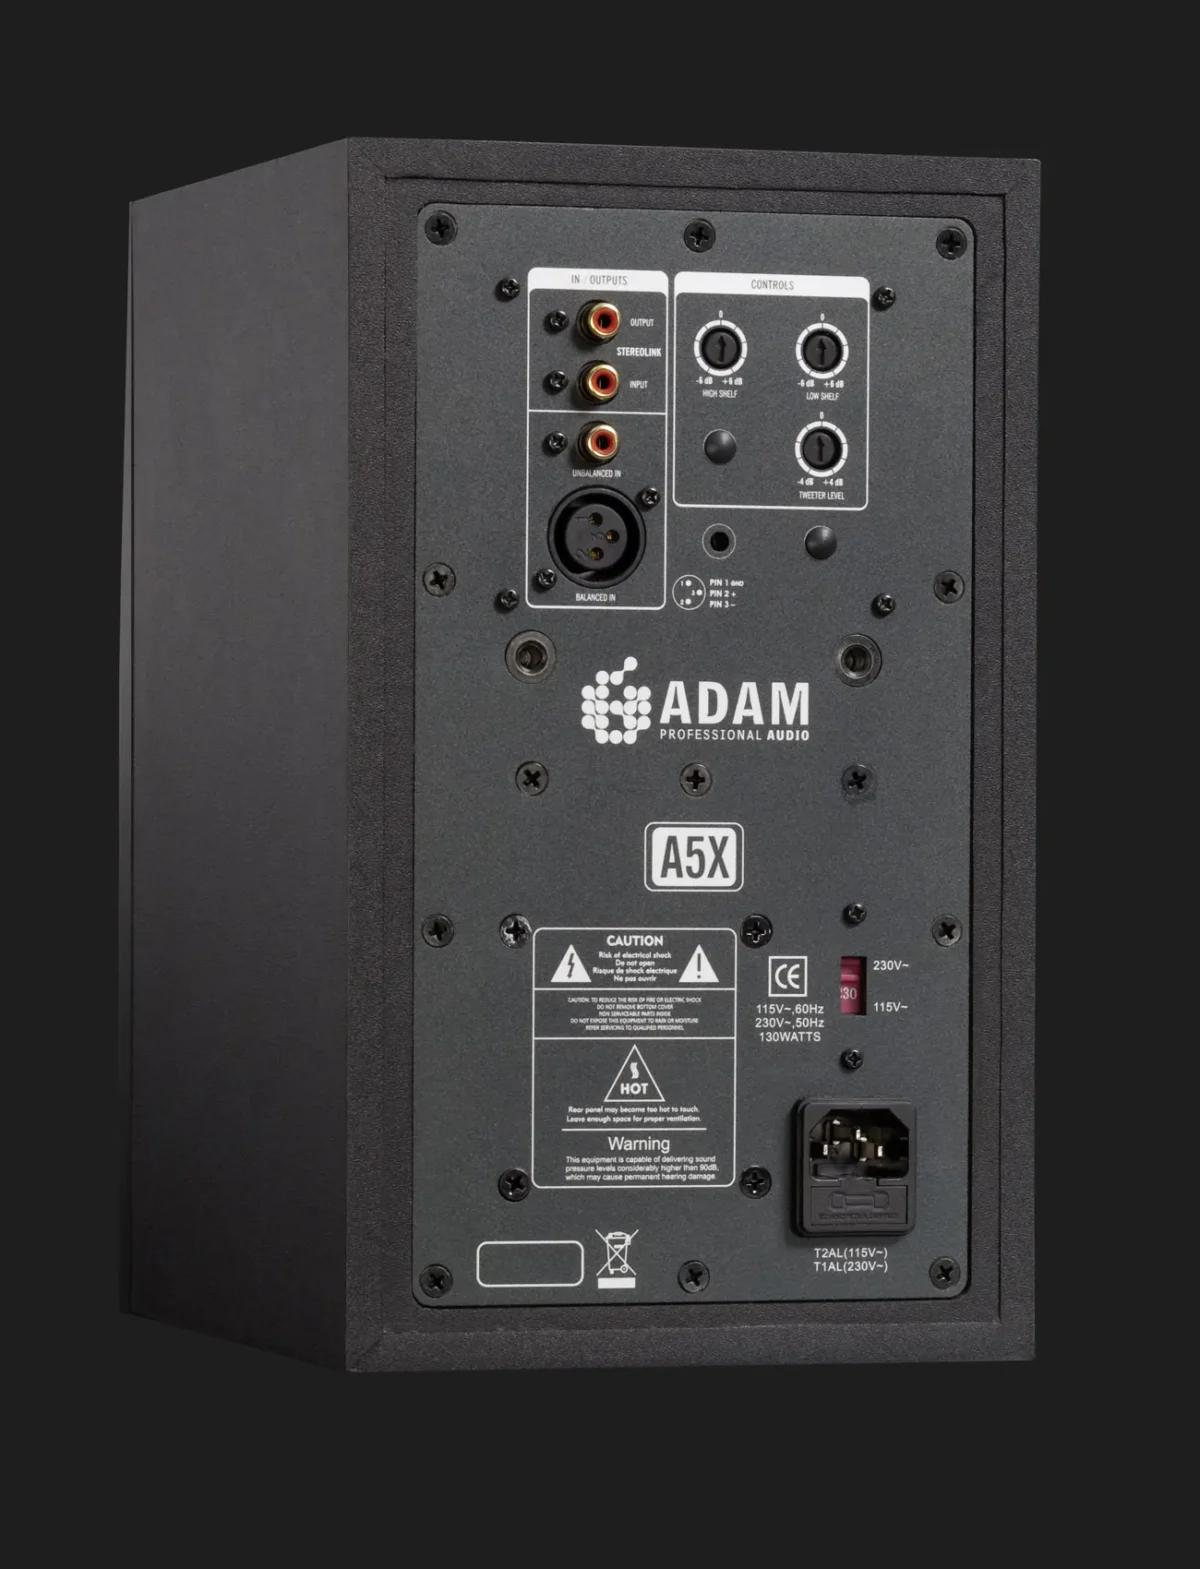 Adam Audio A5X studio monitor